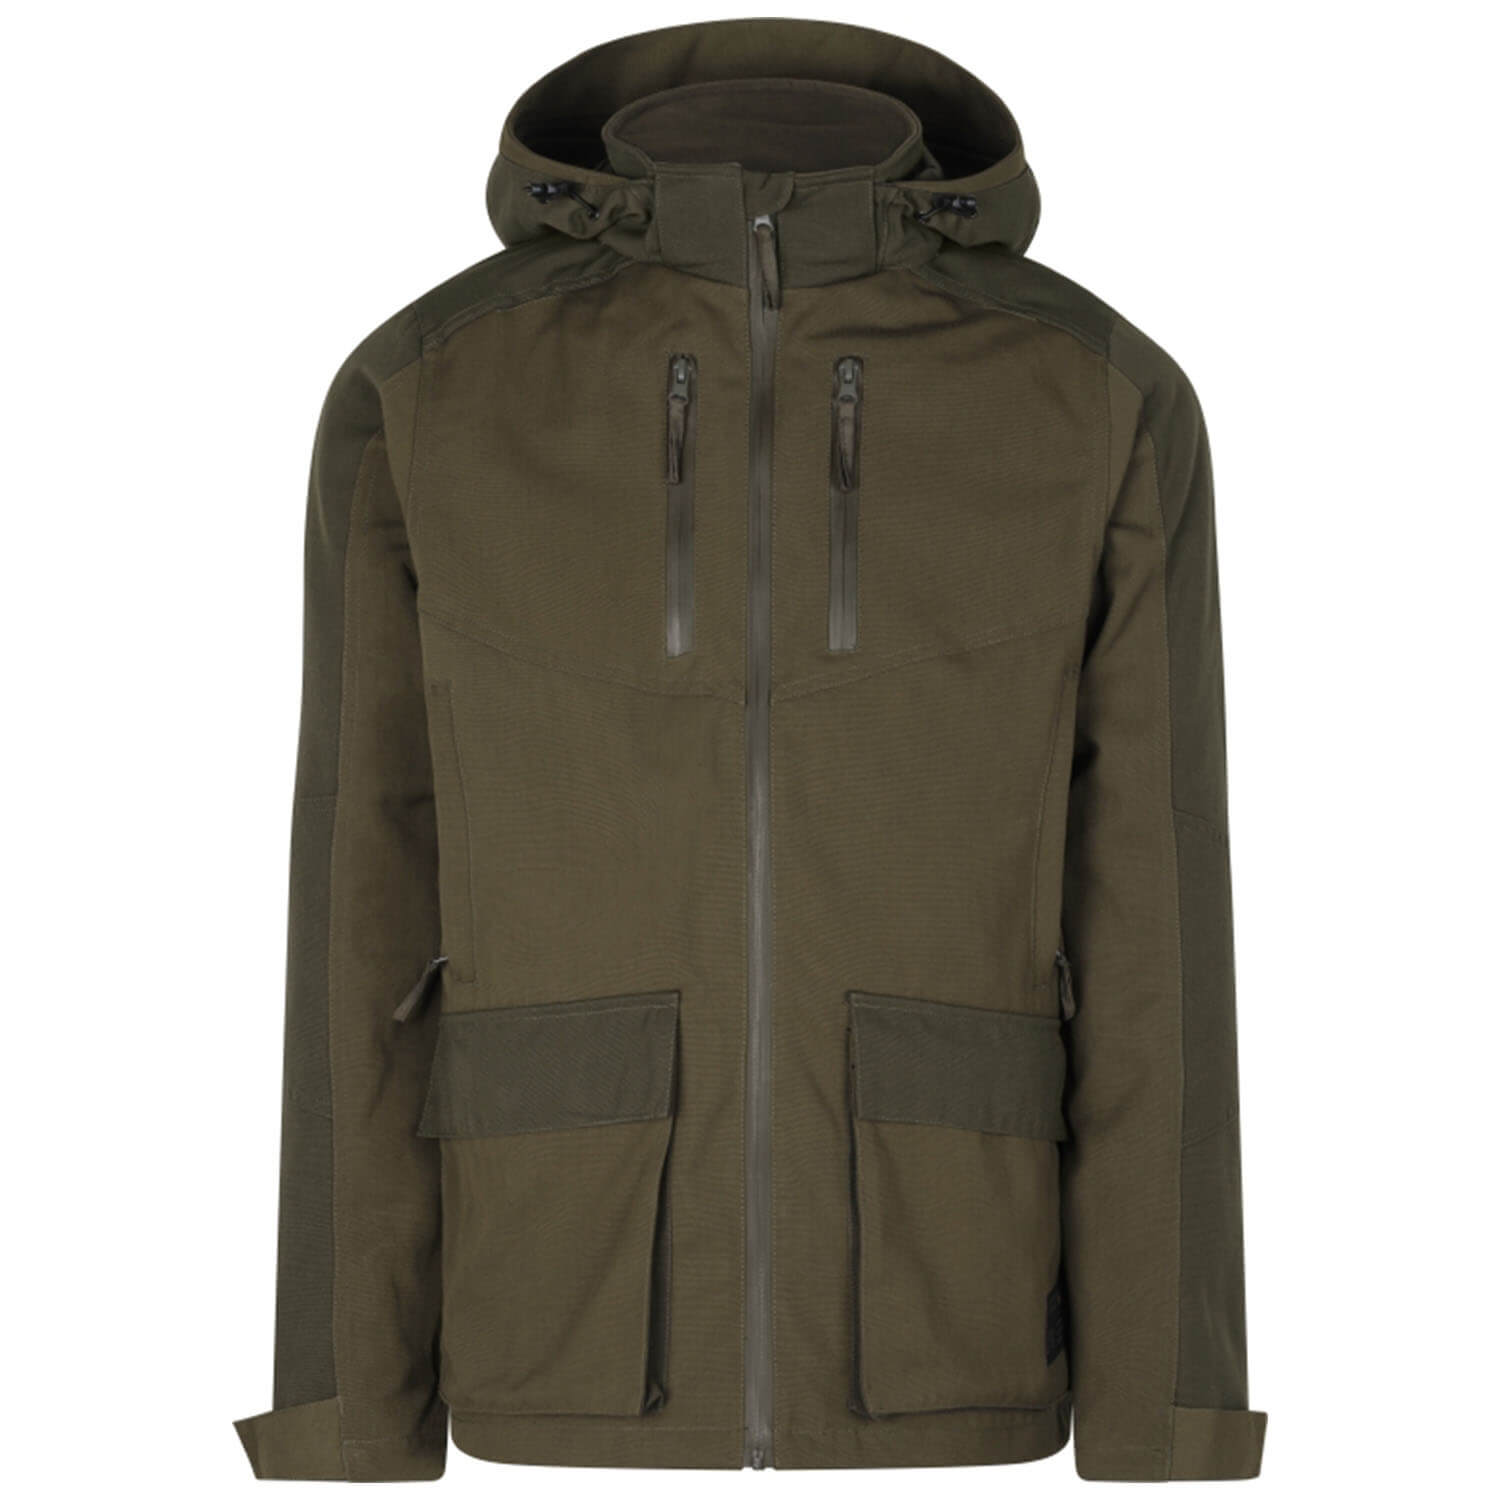 Seeland hunting jacket Trax (Light Pine) - Hunting Jackets